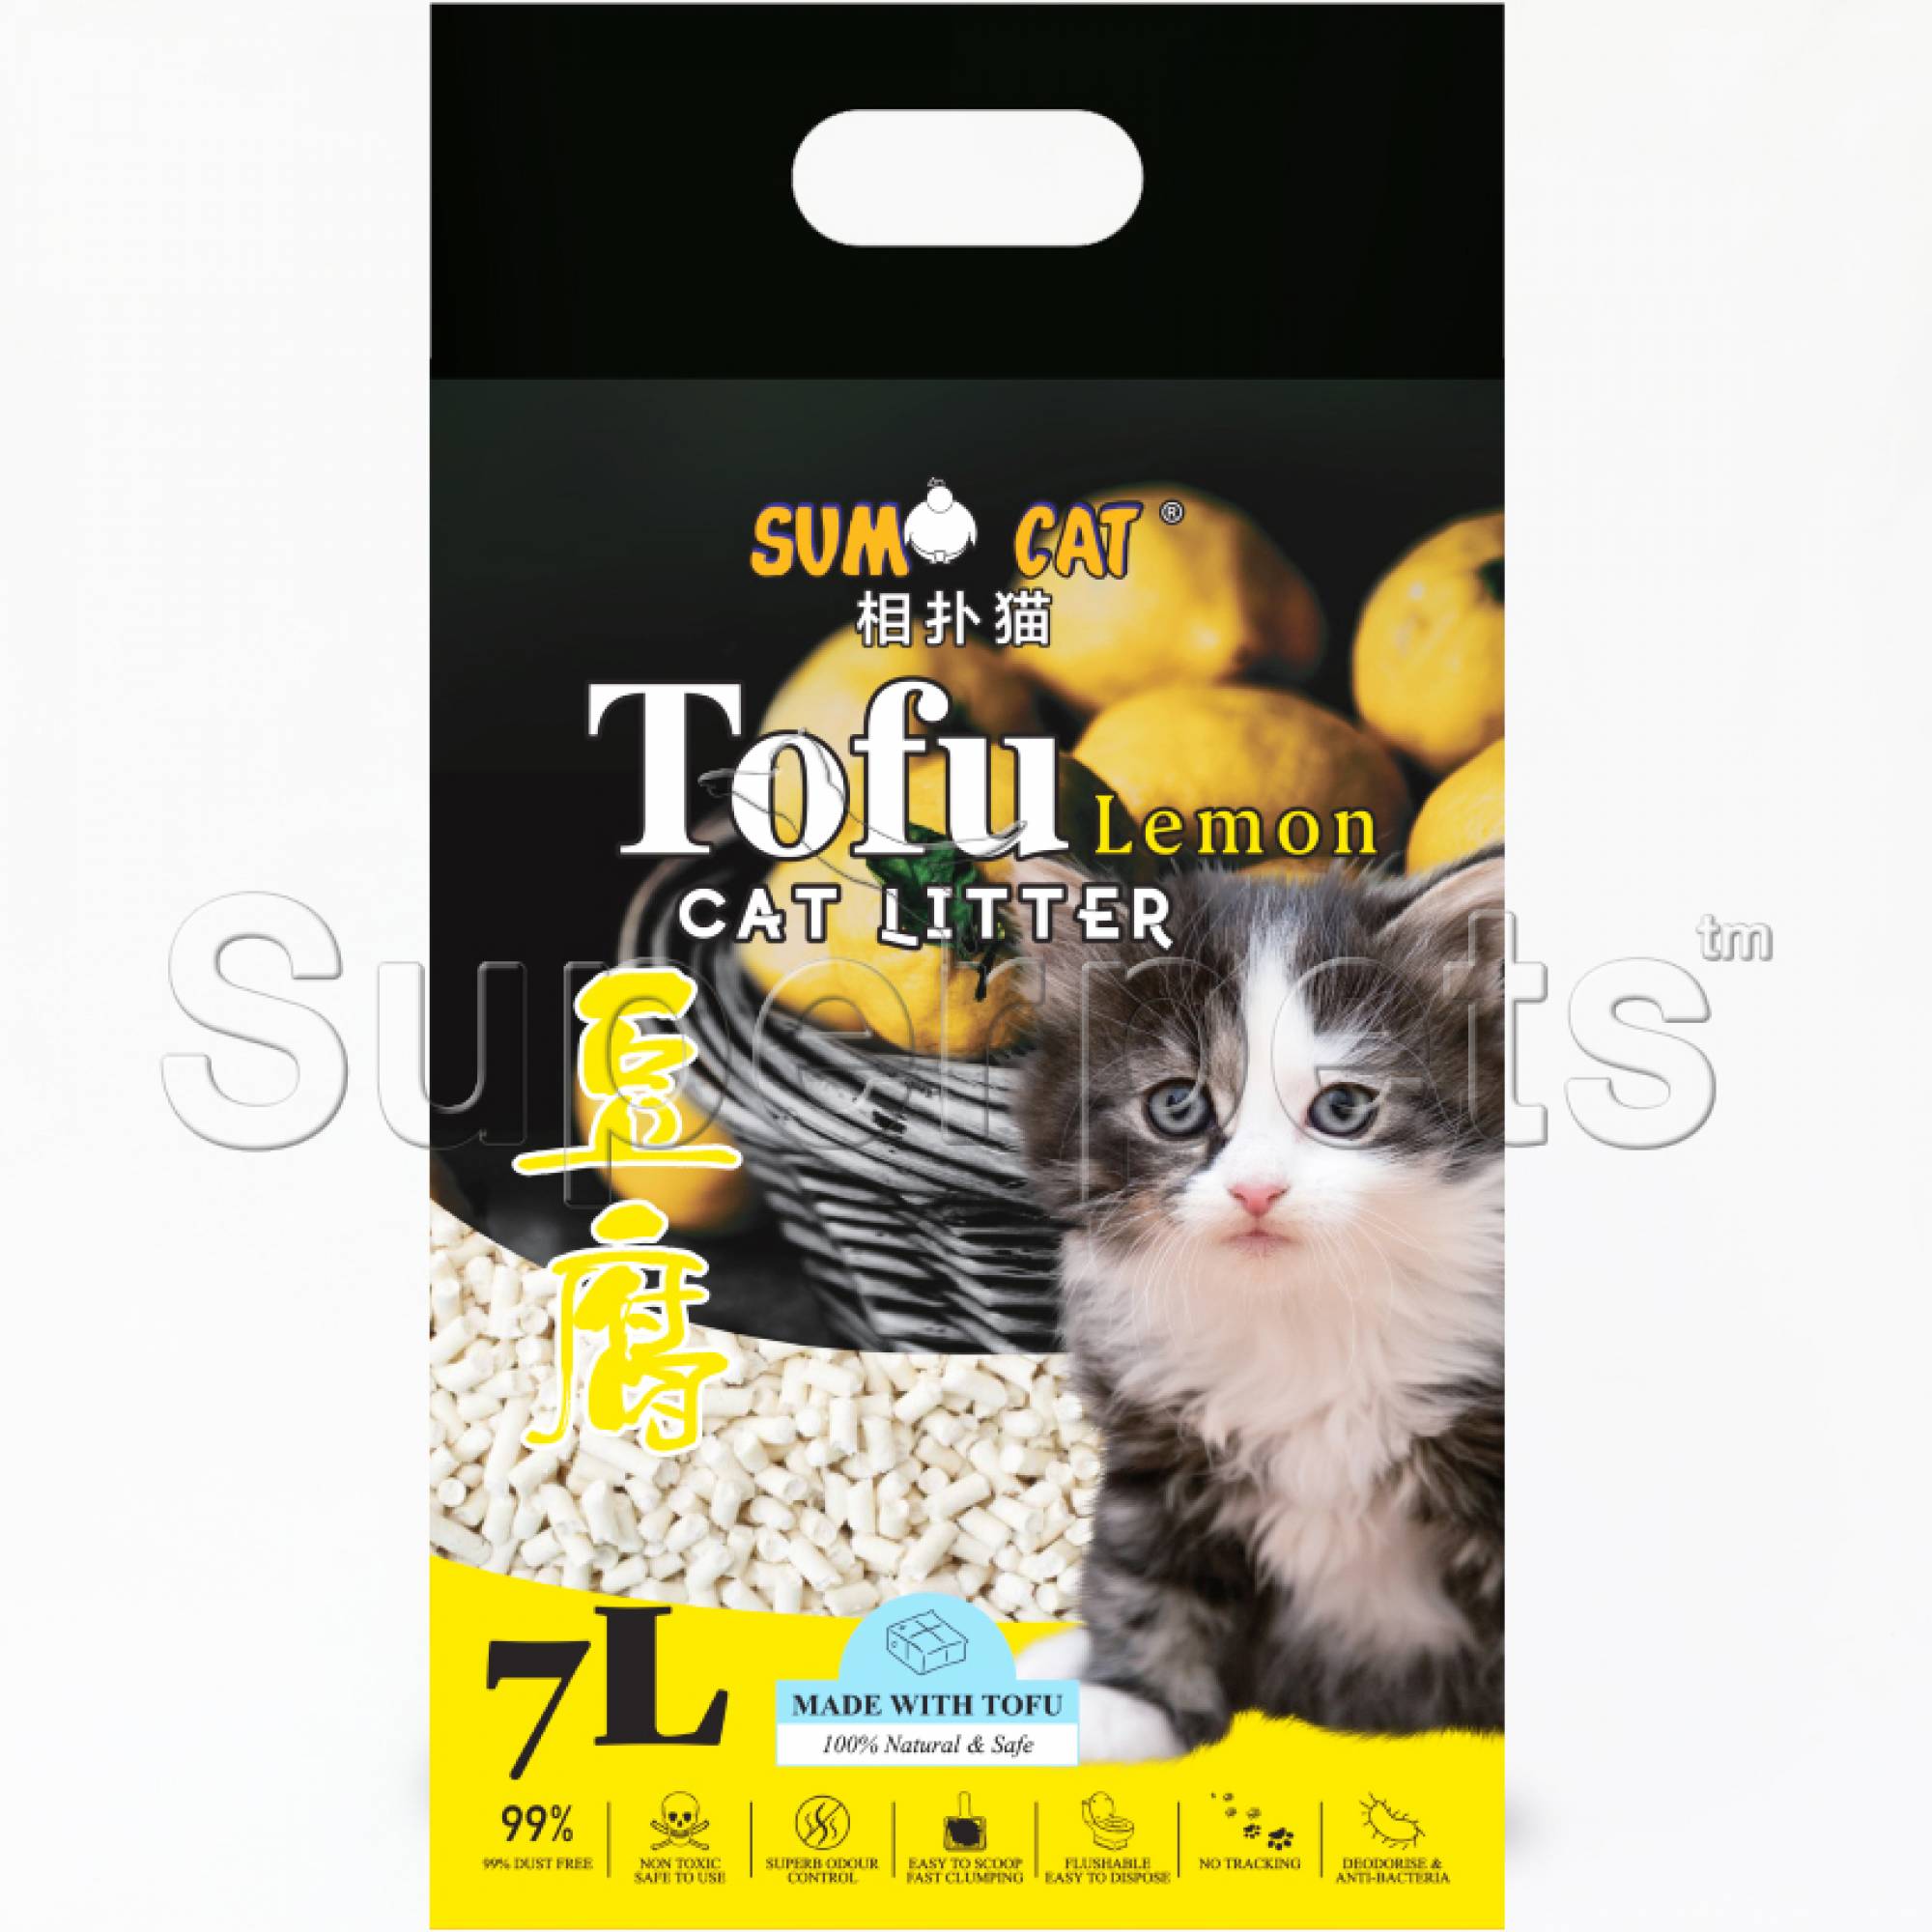 Sumo Cat - Tofu Cat Litter 7L - Lemon